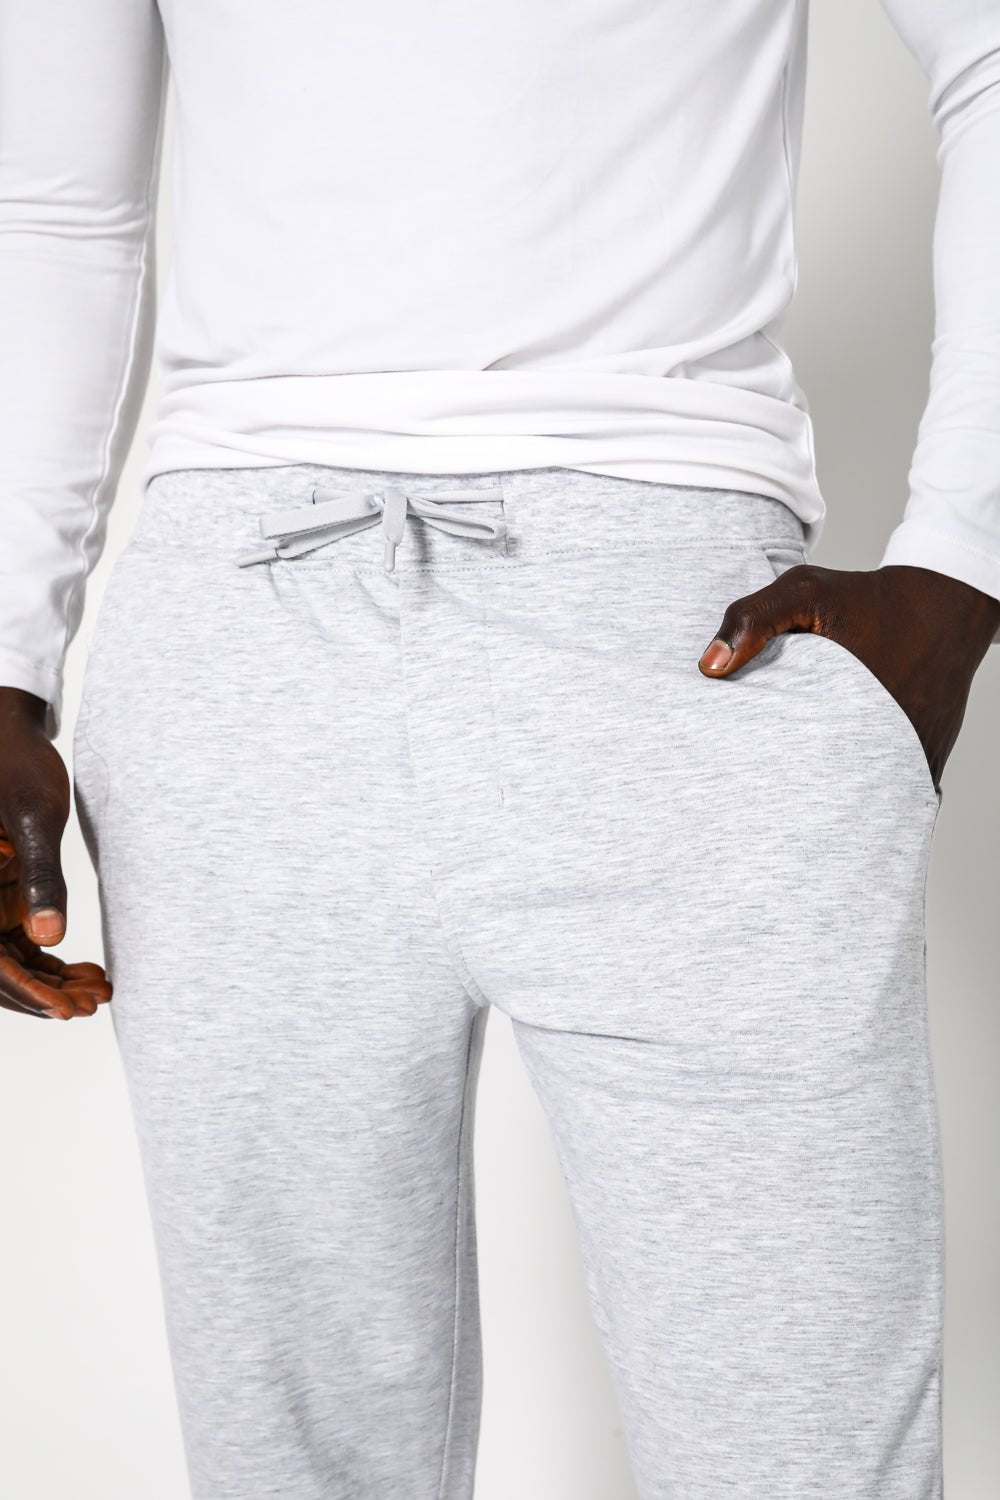 DELTA - מכנסי ג’וגר ארוכים דקים עם כיסים בצבע אפור - MASHBIR//365